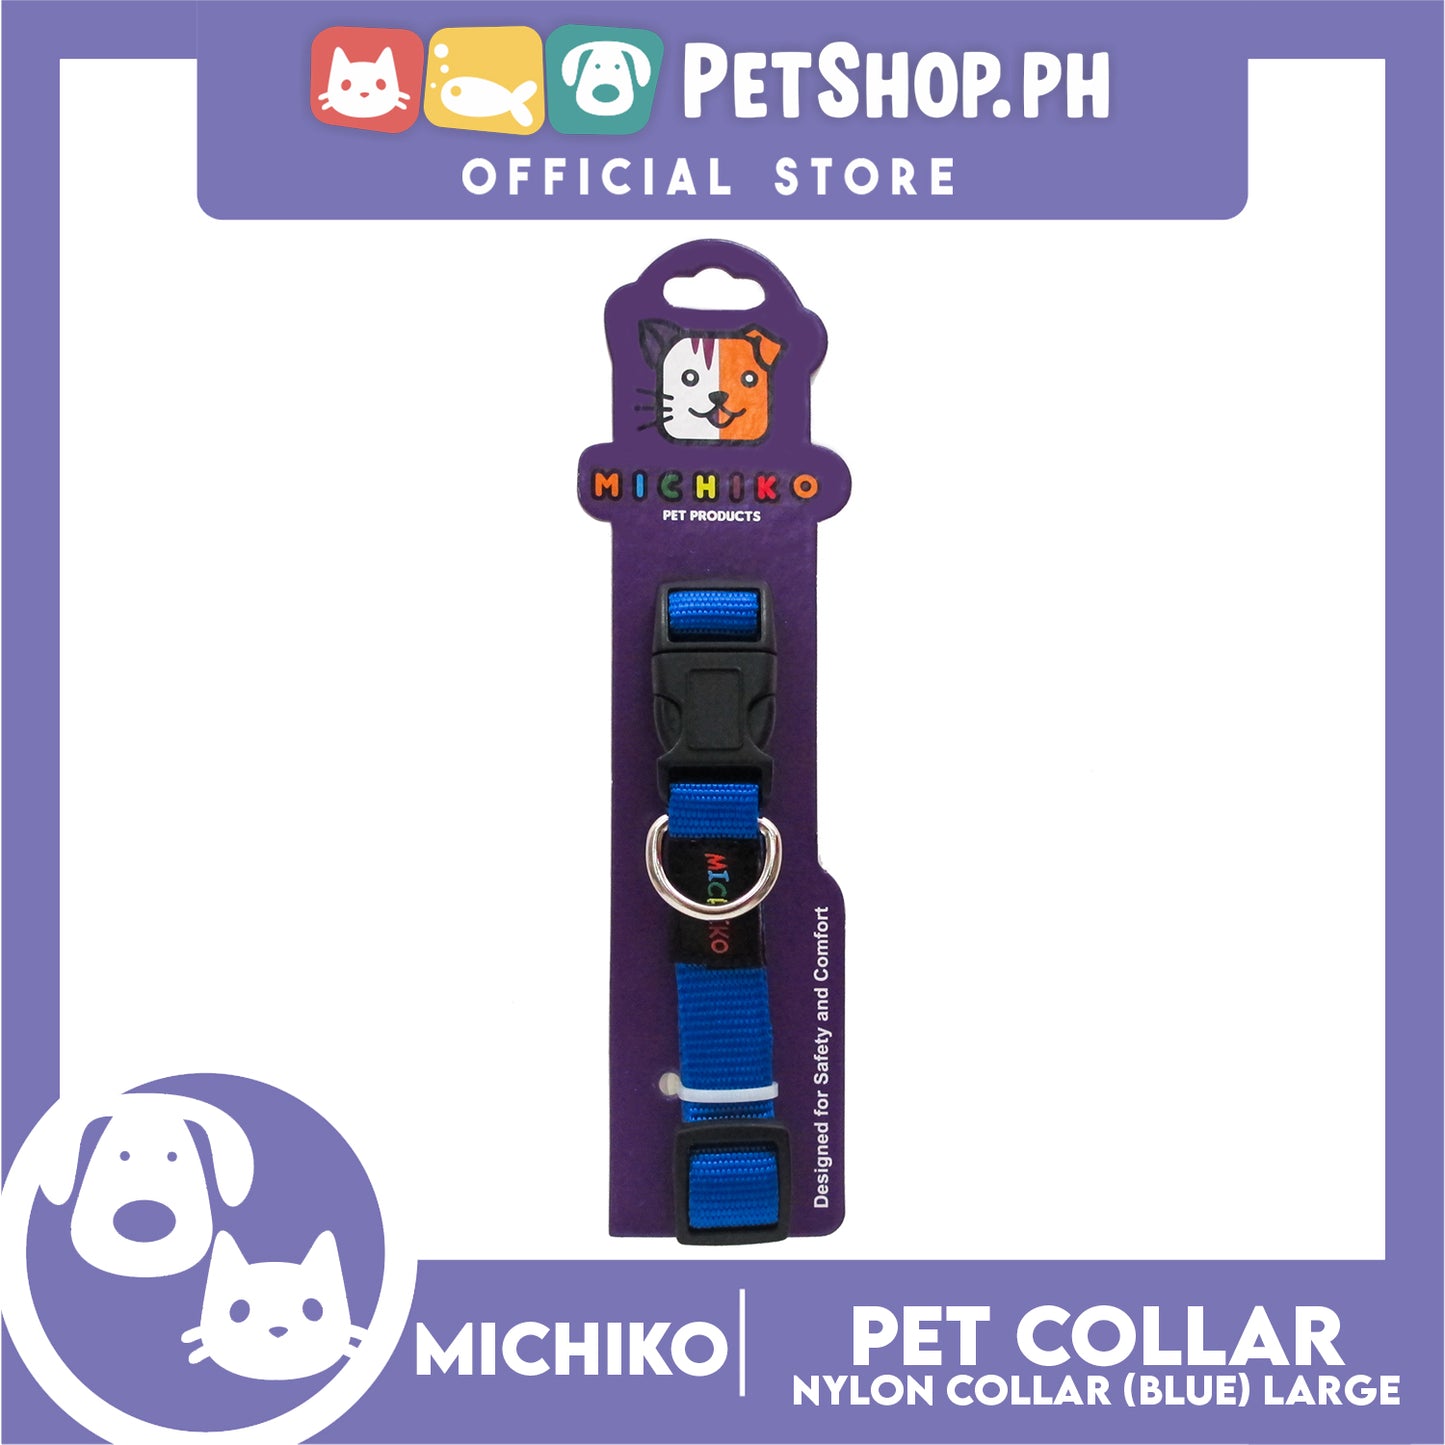 Michiko Nylon Collar Blue (Large) Pet Collar